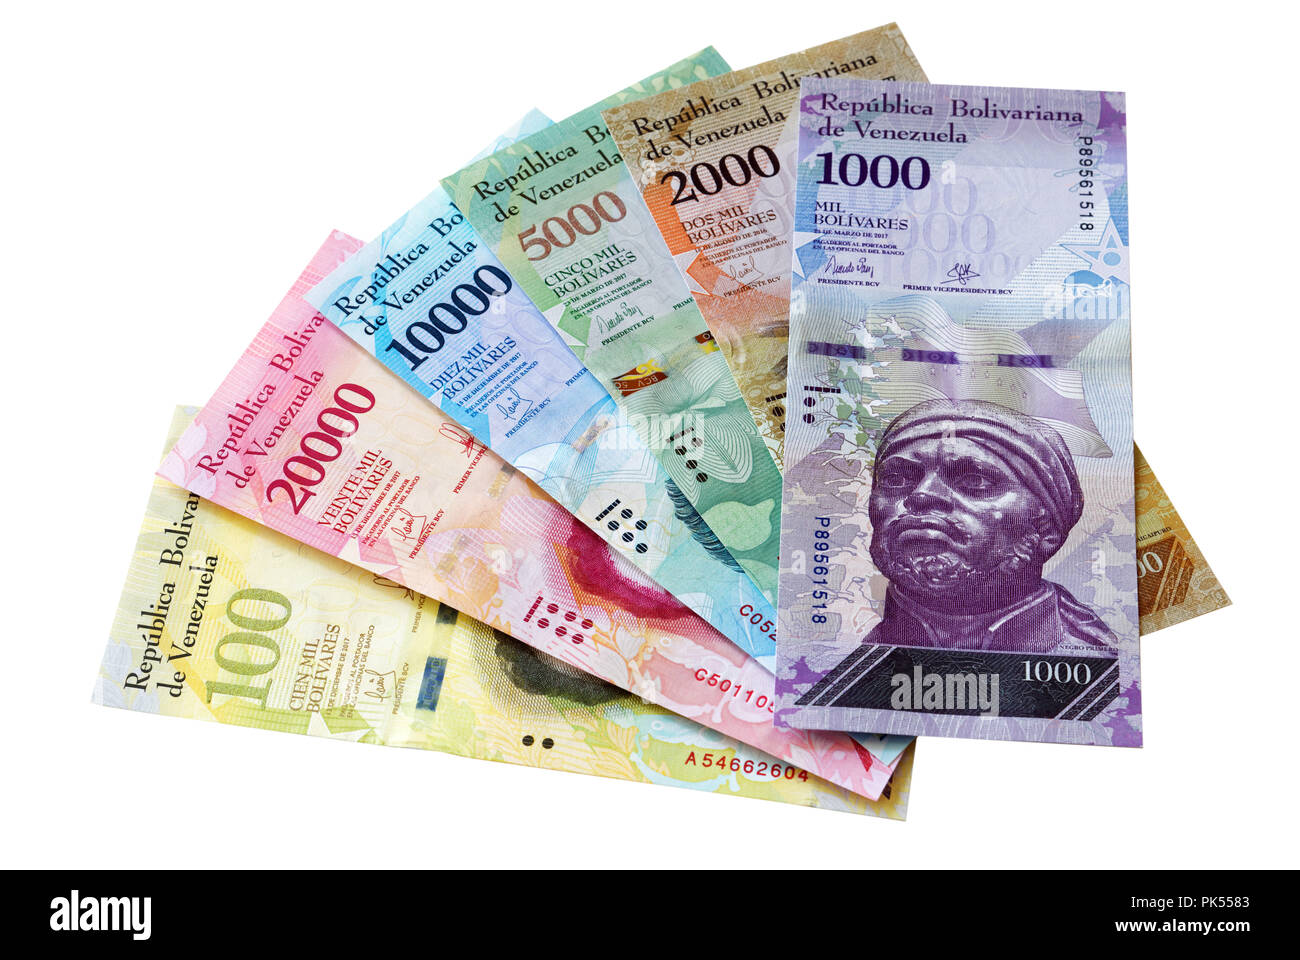 Venezuela hyperinflation banknotes Stock Photo